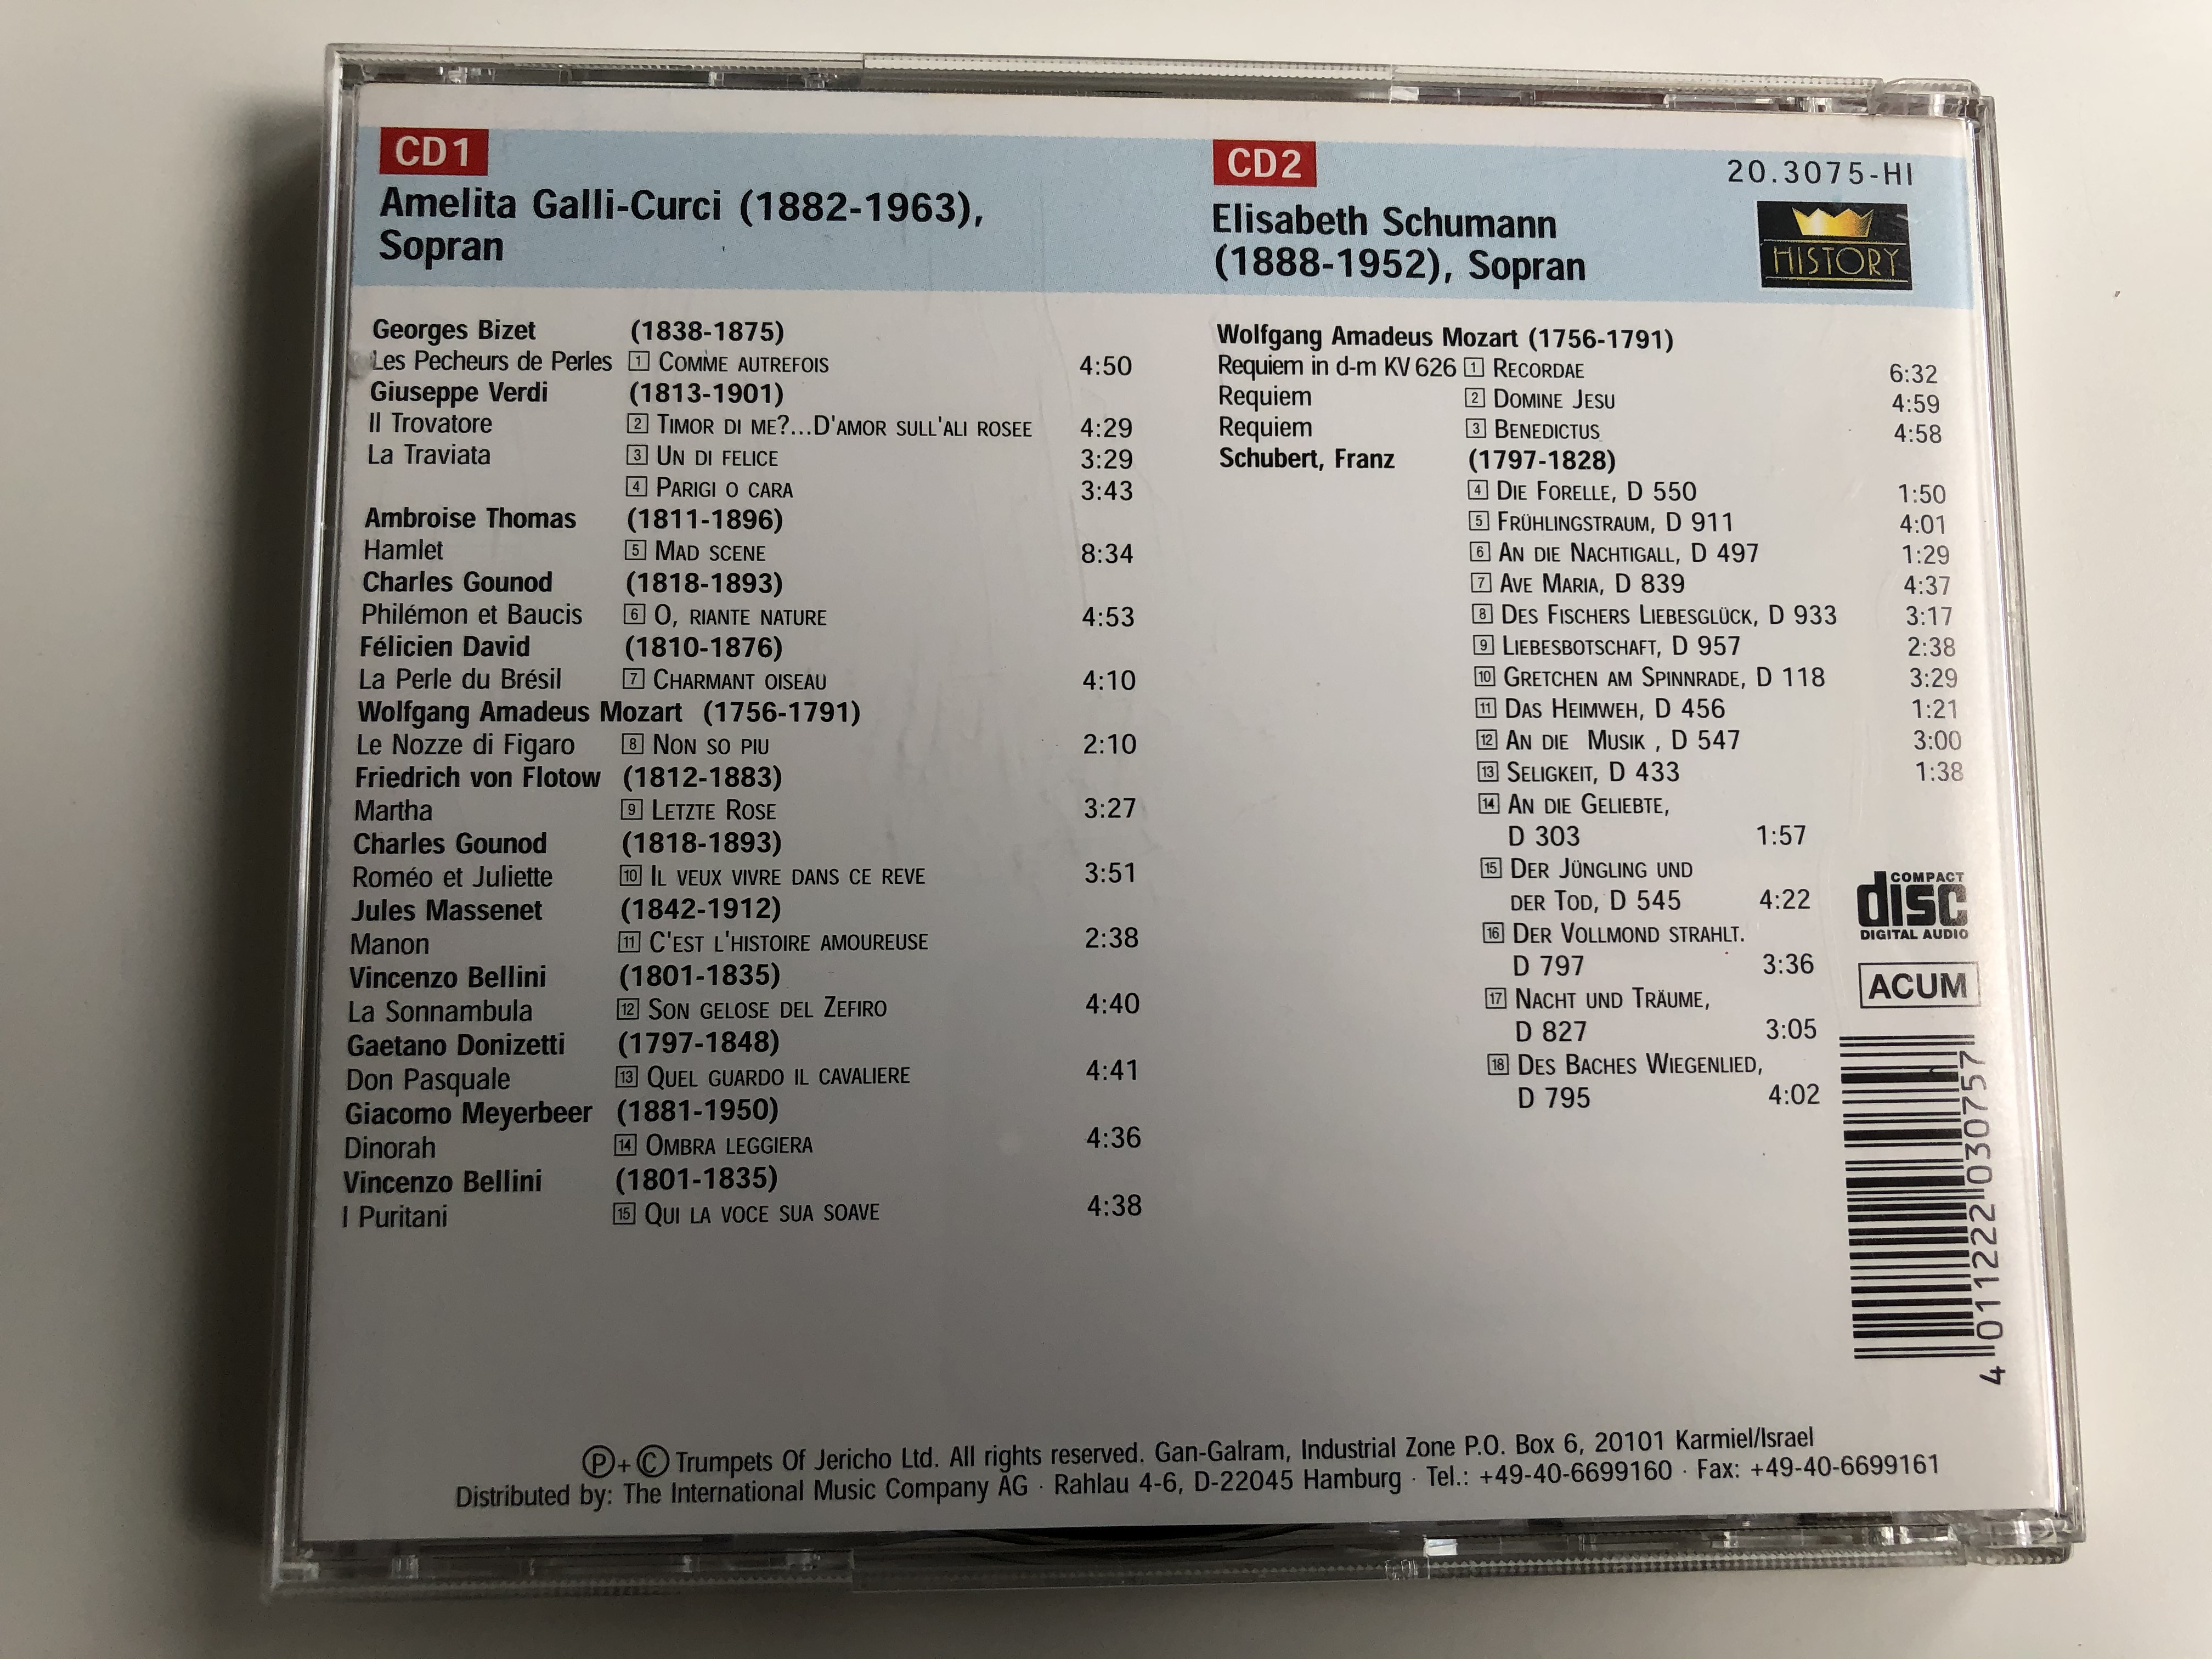 great-voices-of-the-opera-amelita-galli-gurci-elisabeth-schumann-history-2x-audio-cd-20-9-.jpg